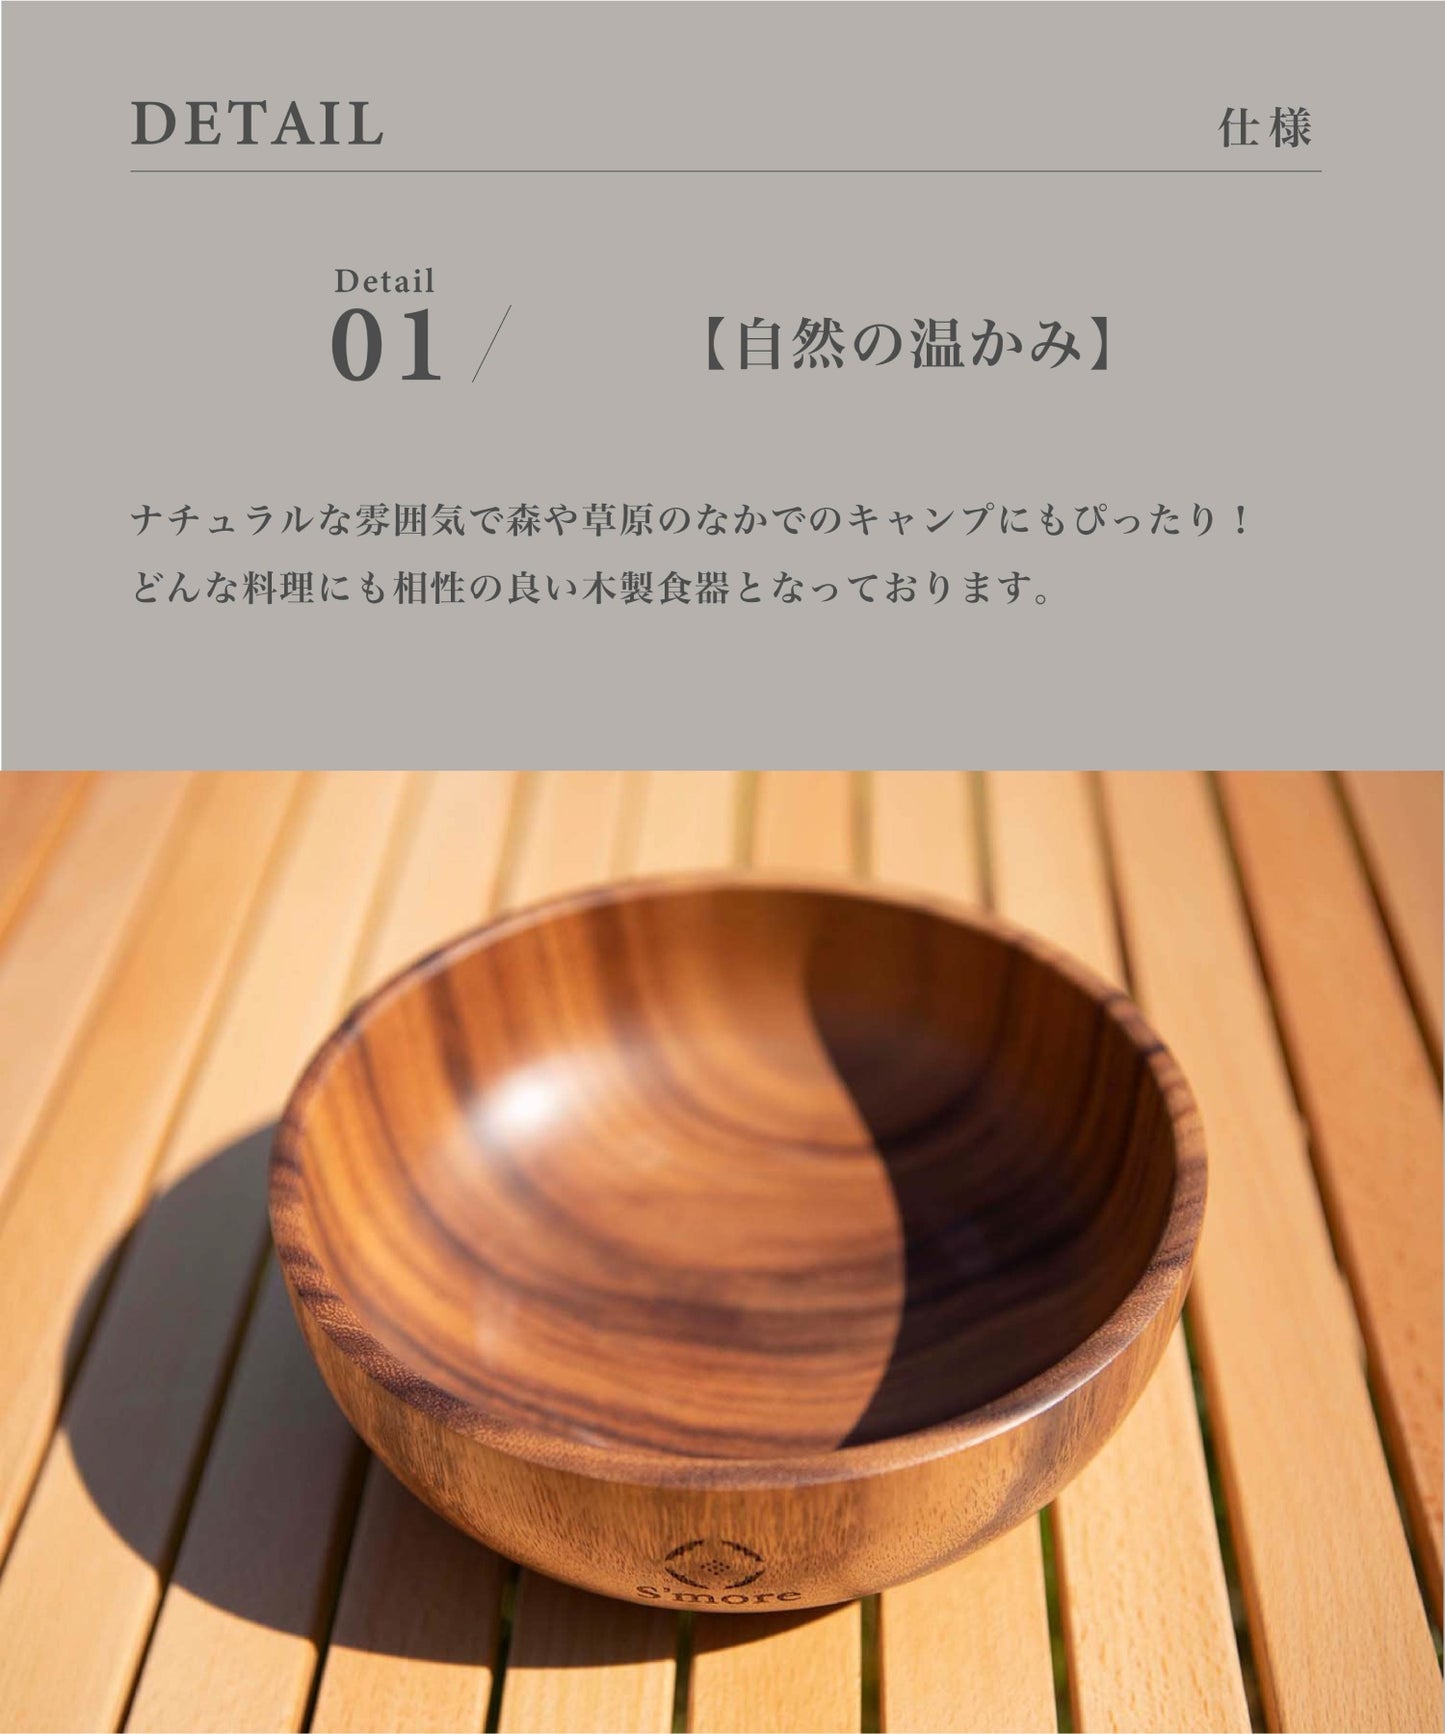 【 S'more / Jenga Bowl 】ジェンガボウル 木製 食器